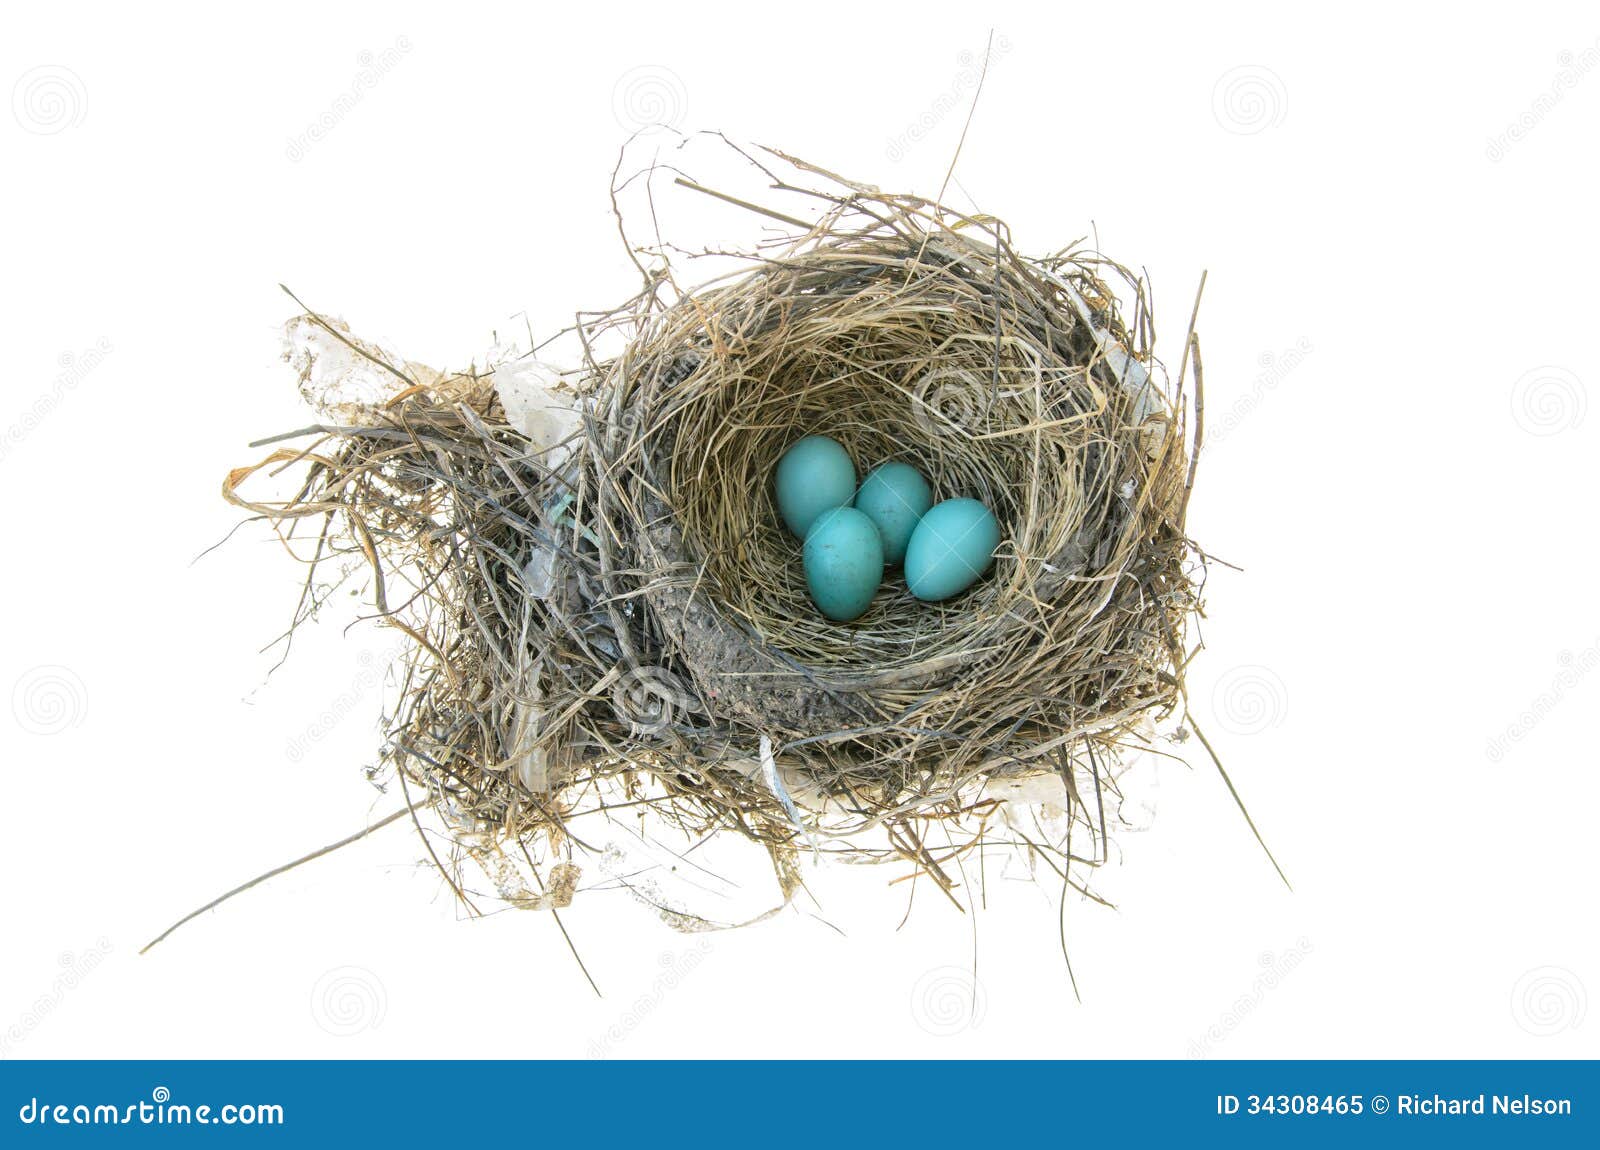 robin's nest clip art - photo #33